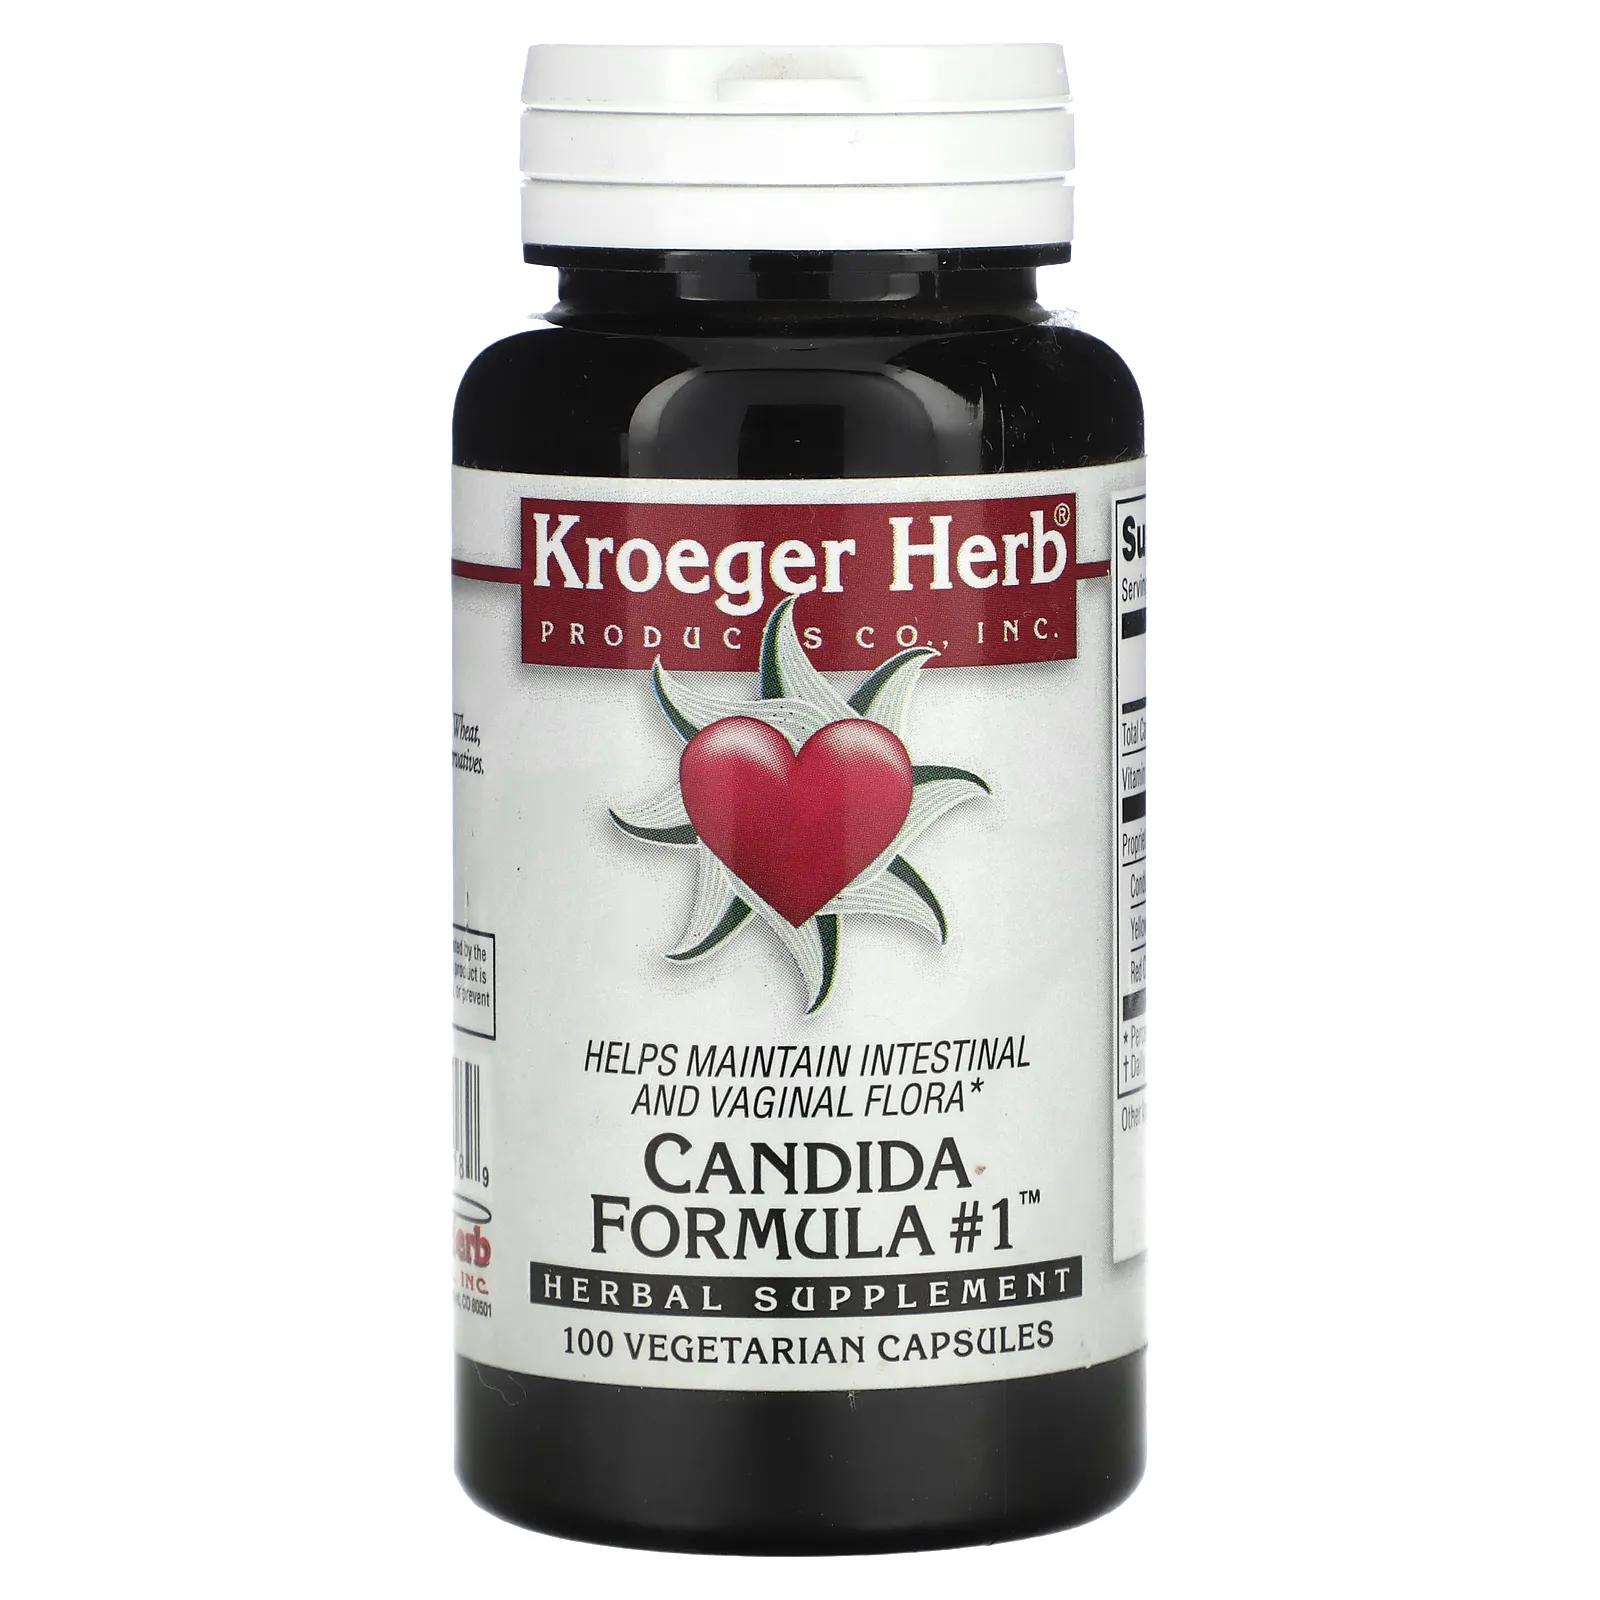 kroeger herb co sunny day таурин дофил 100 таблеток Kroeger Herb Co Candida Formula # 1 100 вегетарианских капсул